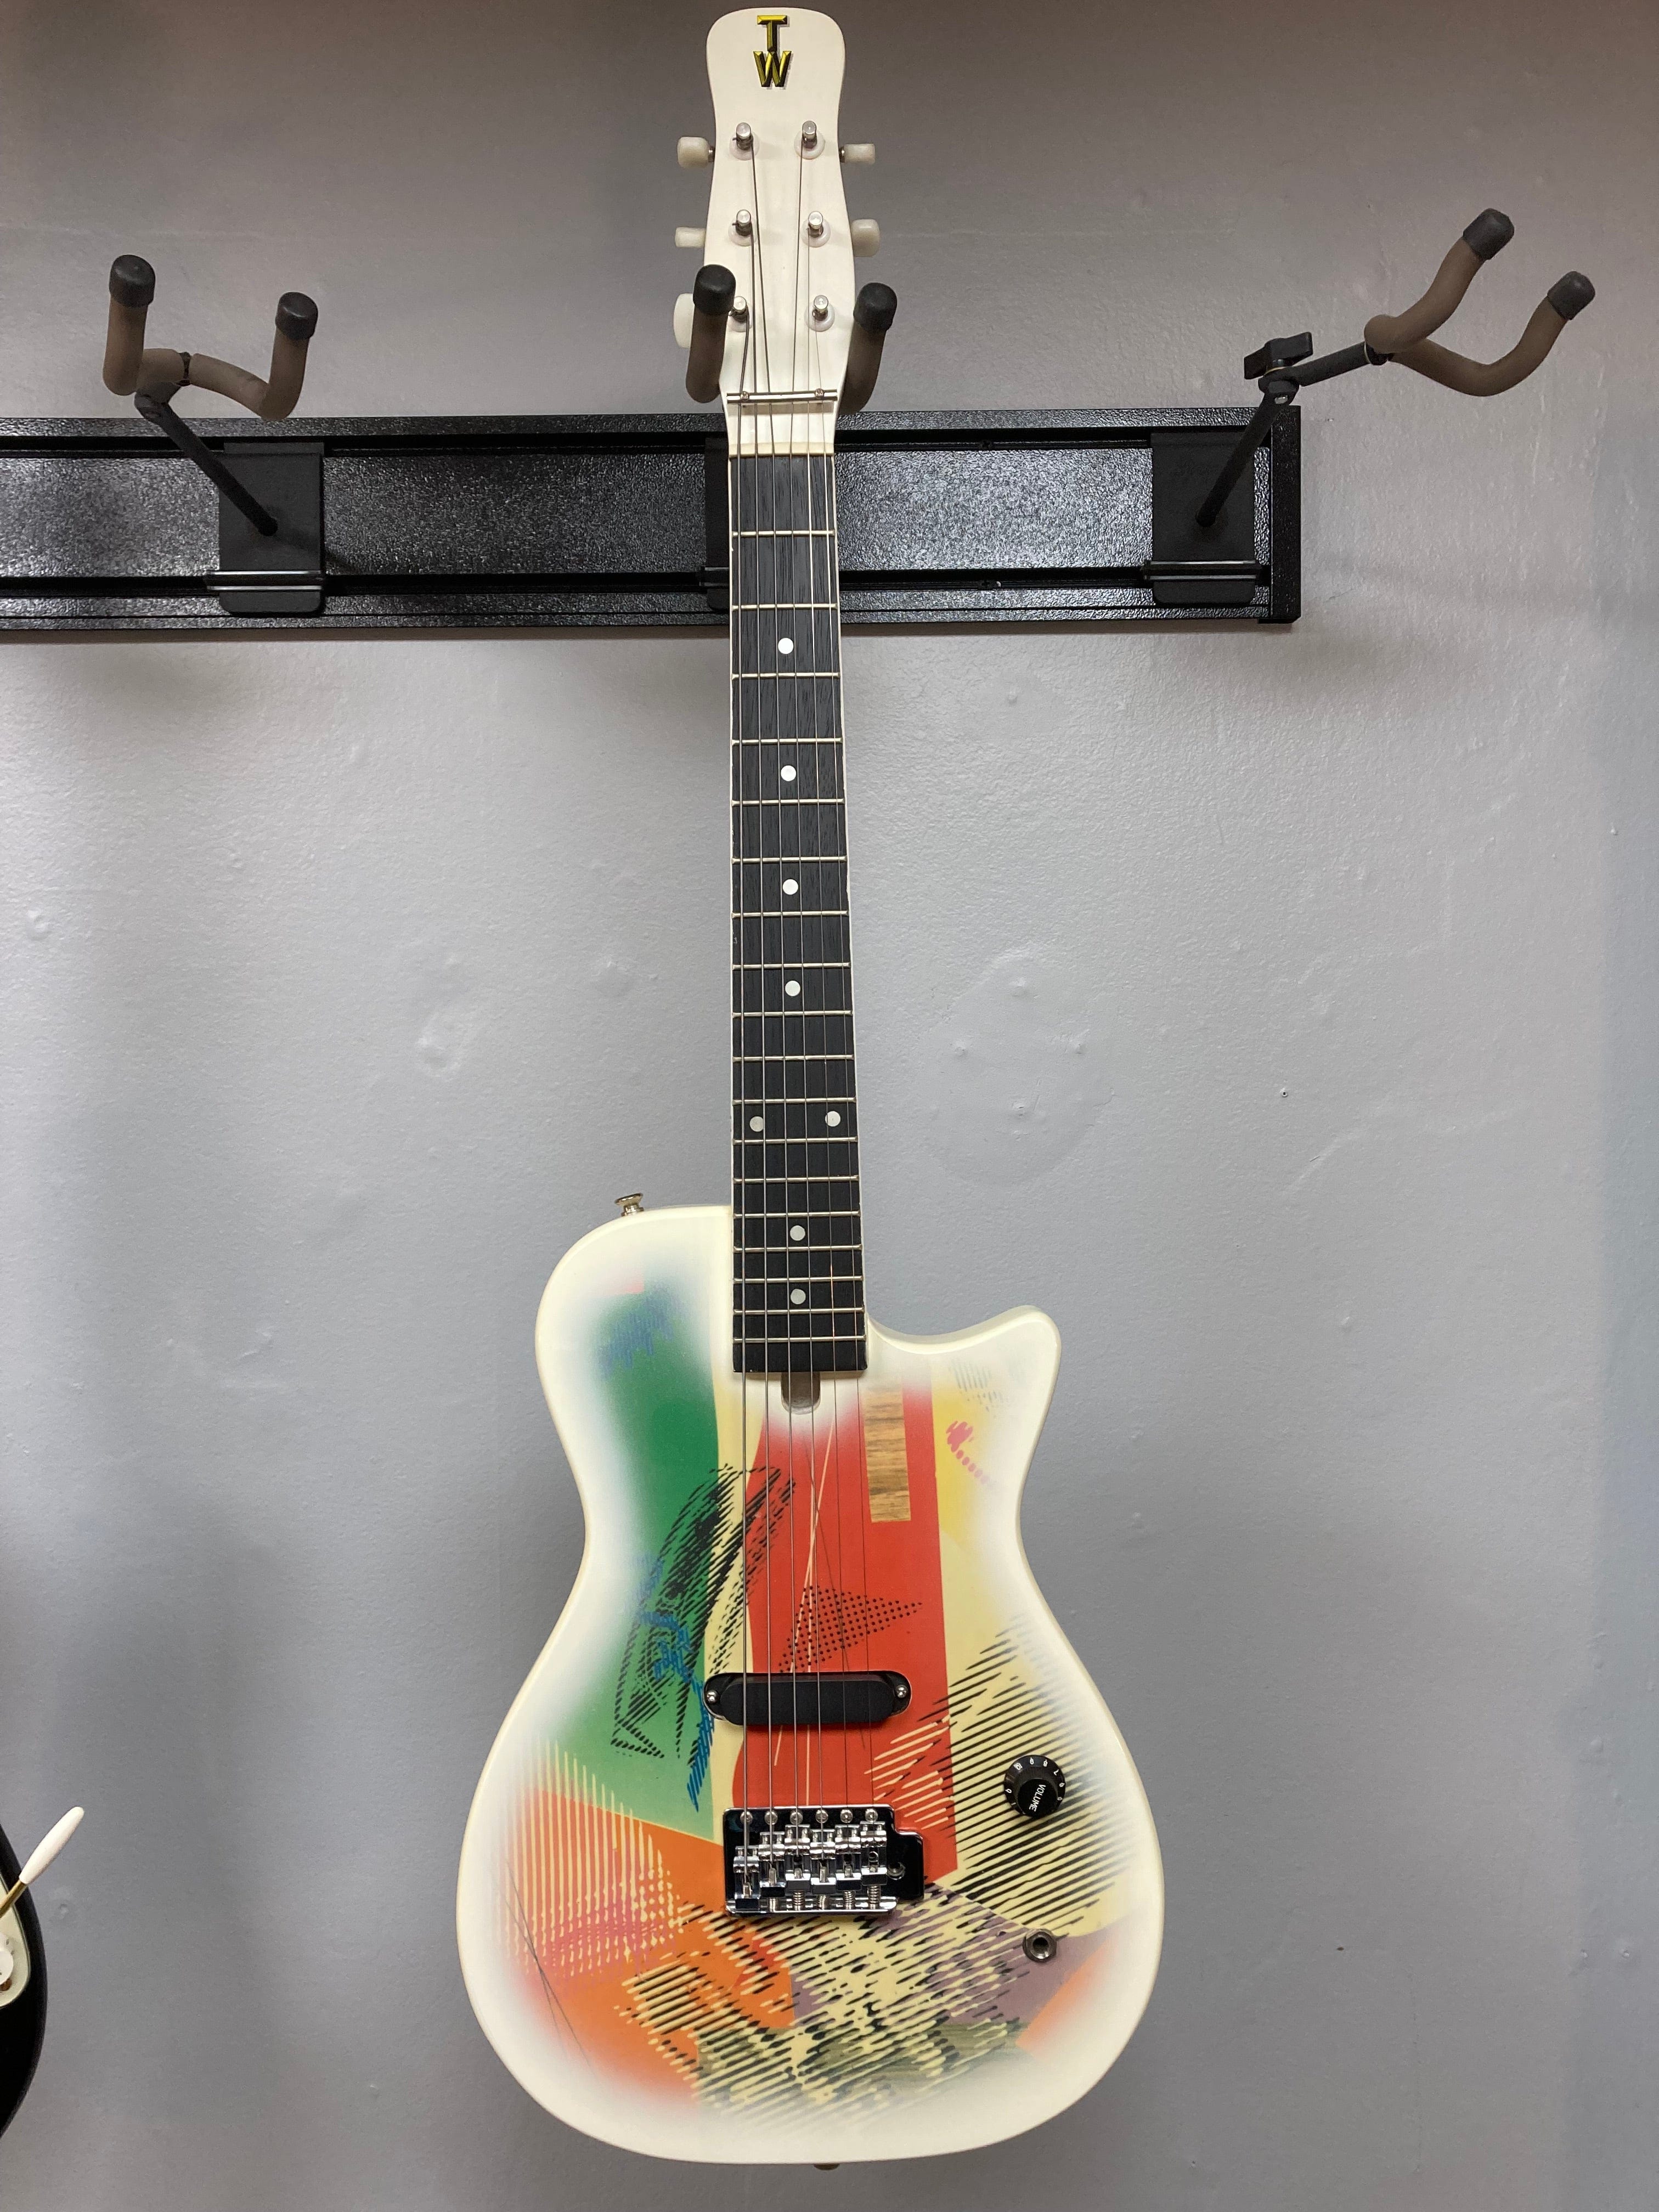 Gretsch Traveling Wilburys TW-100T Electric Guitar